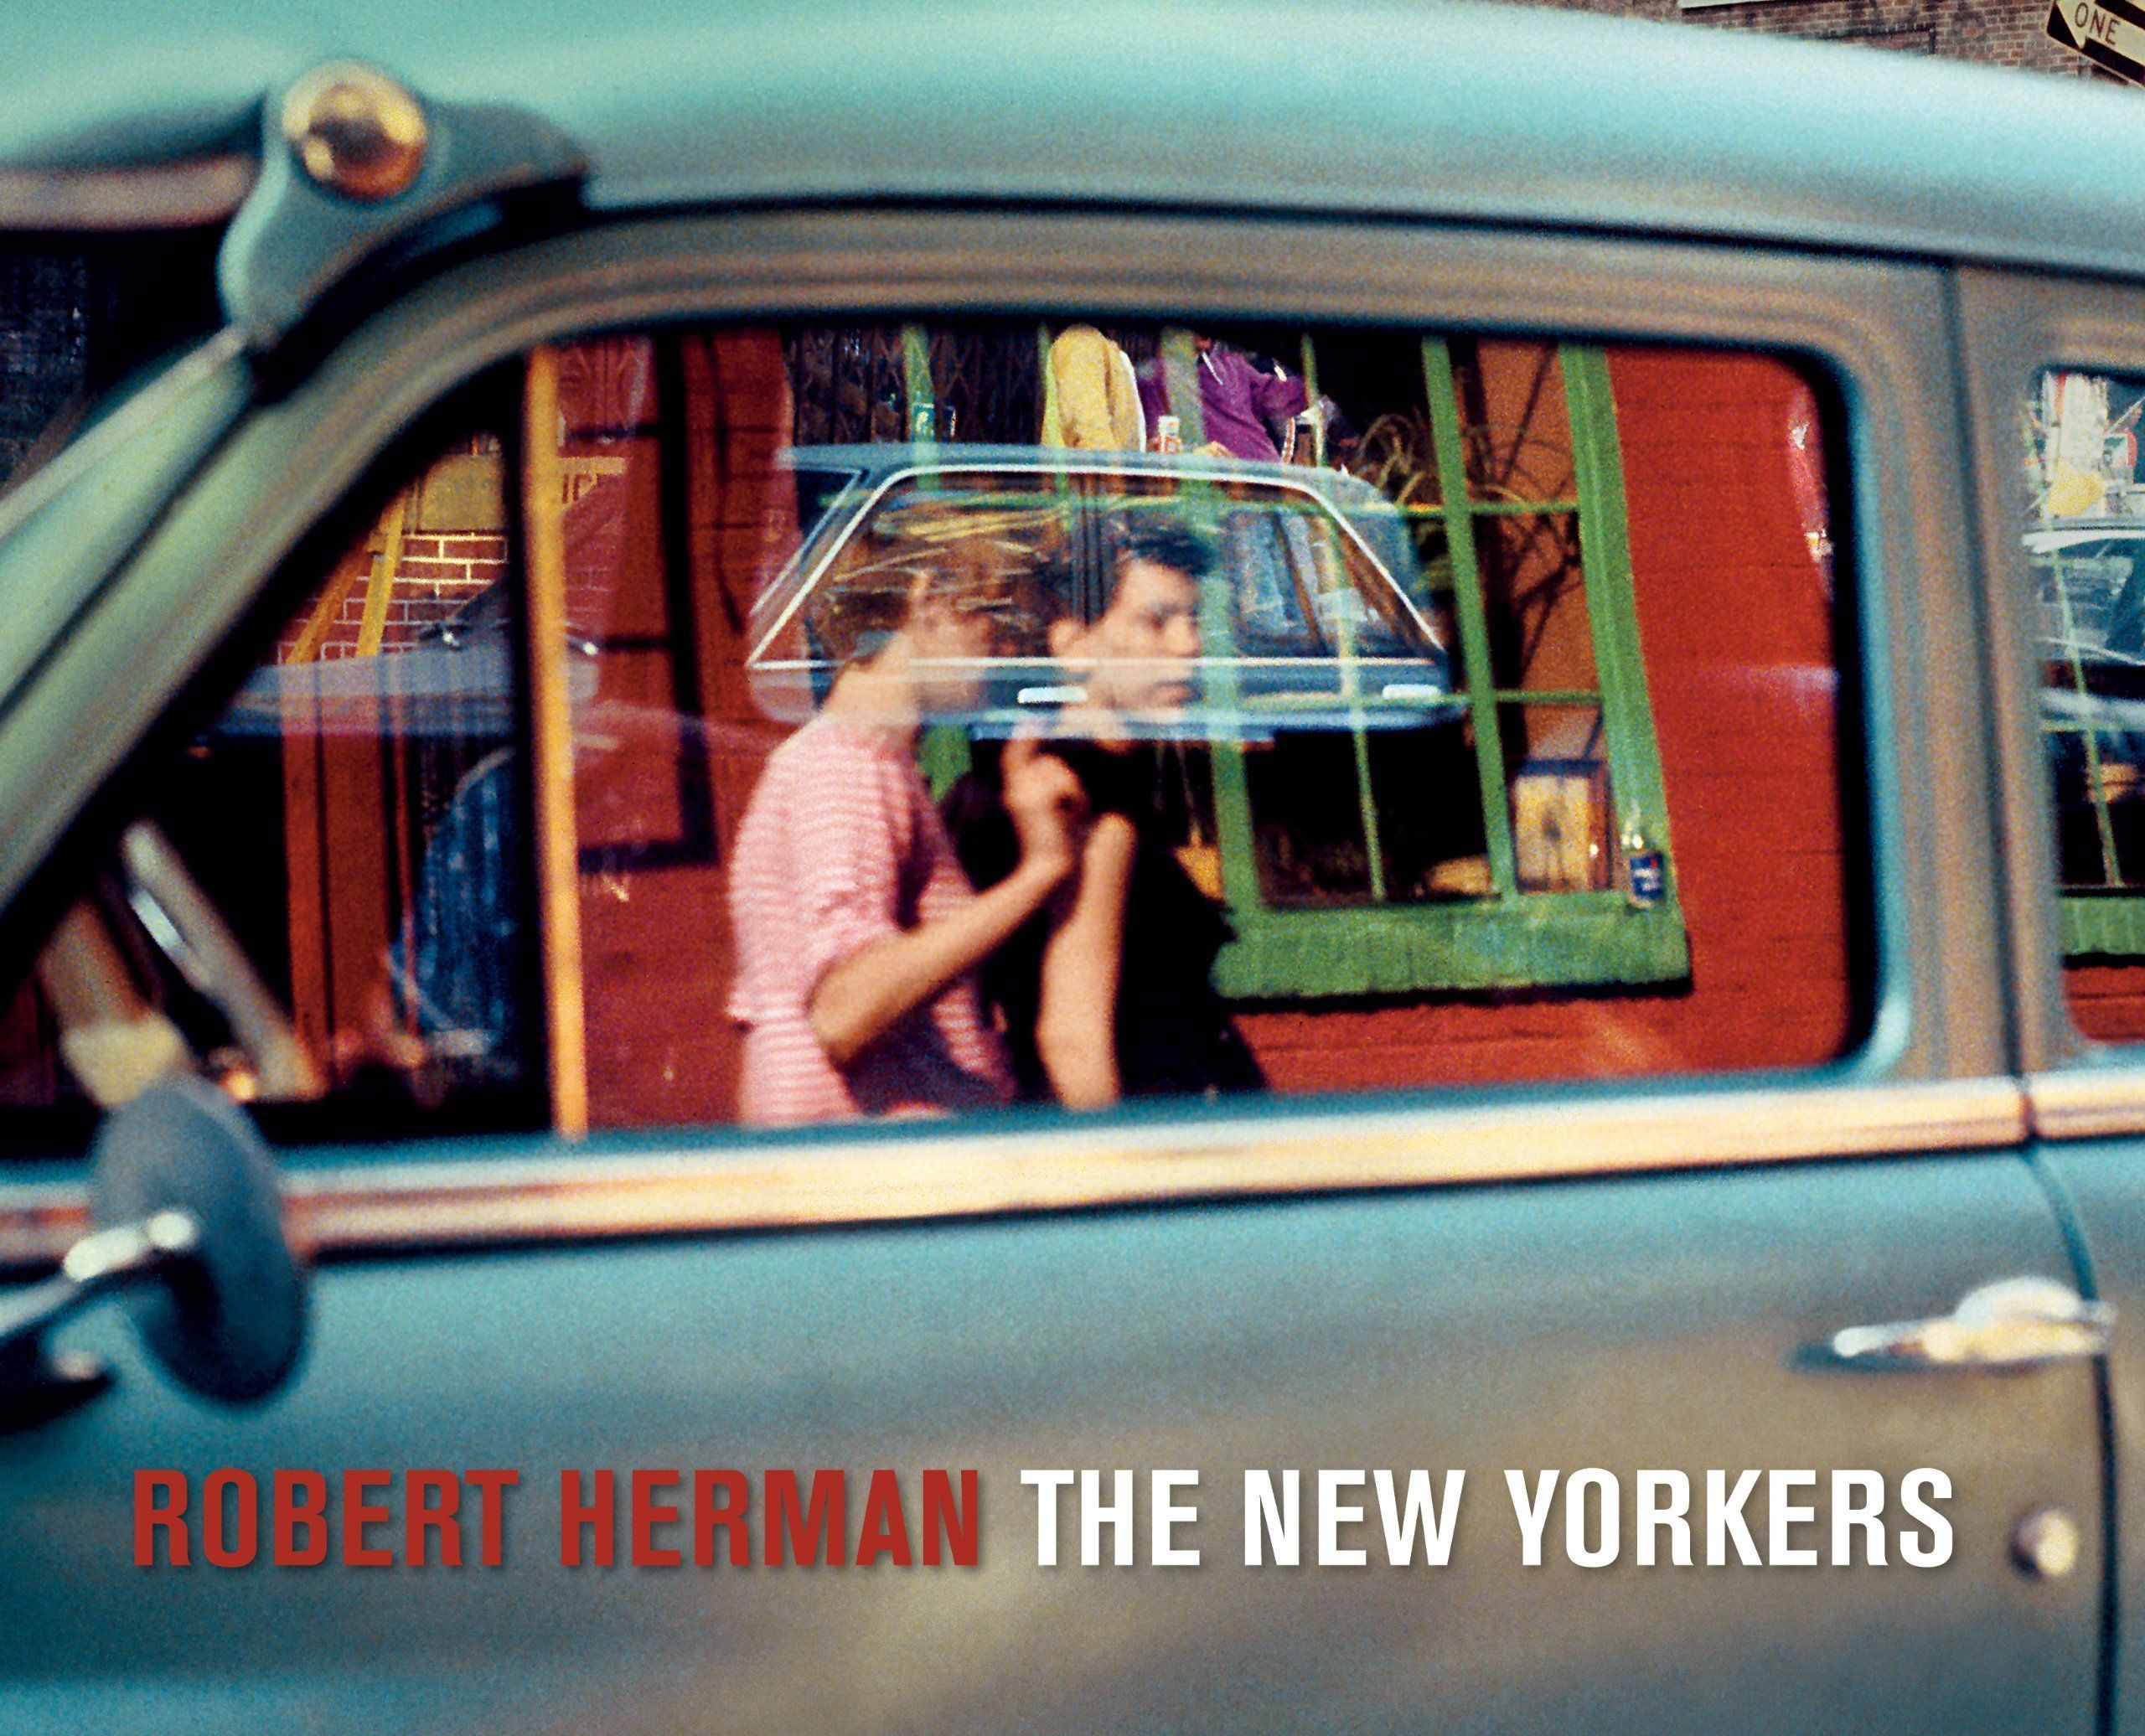 Robert herman the new yorkers